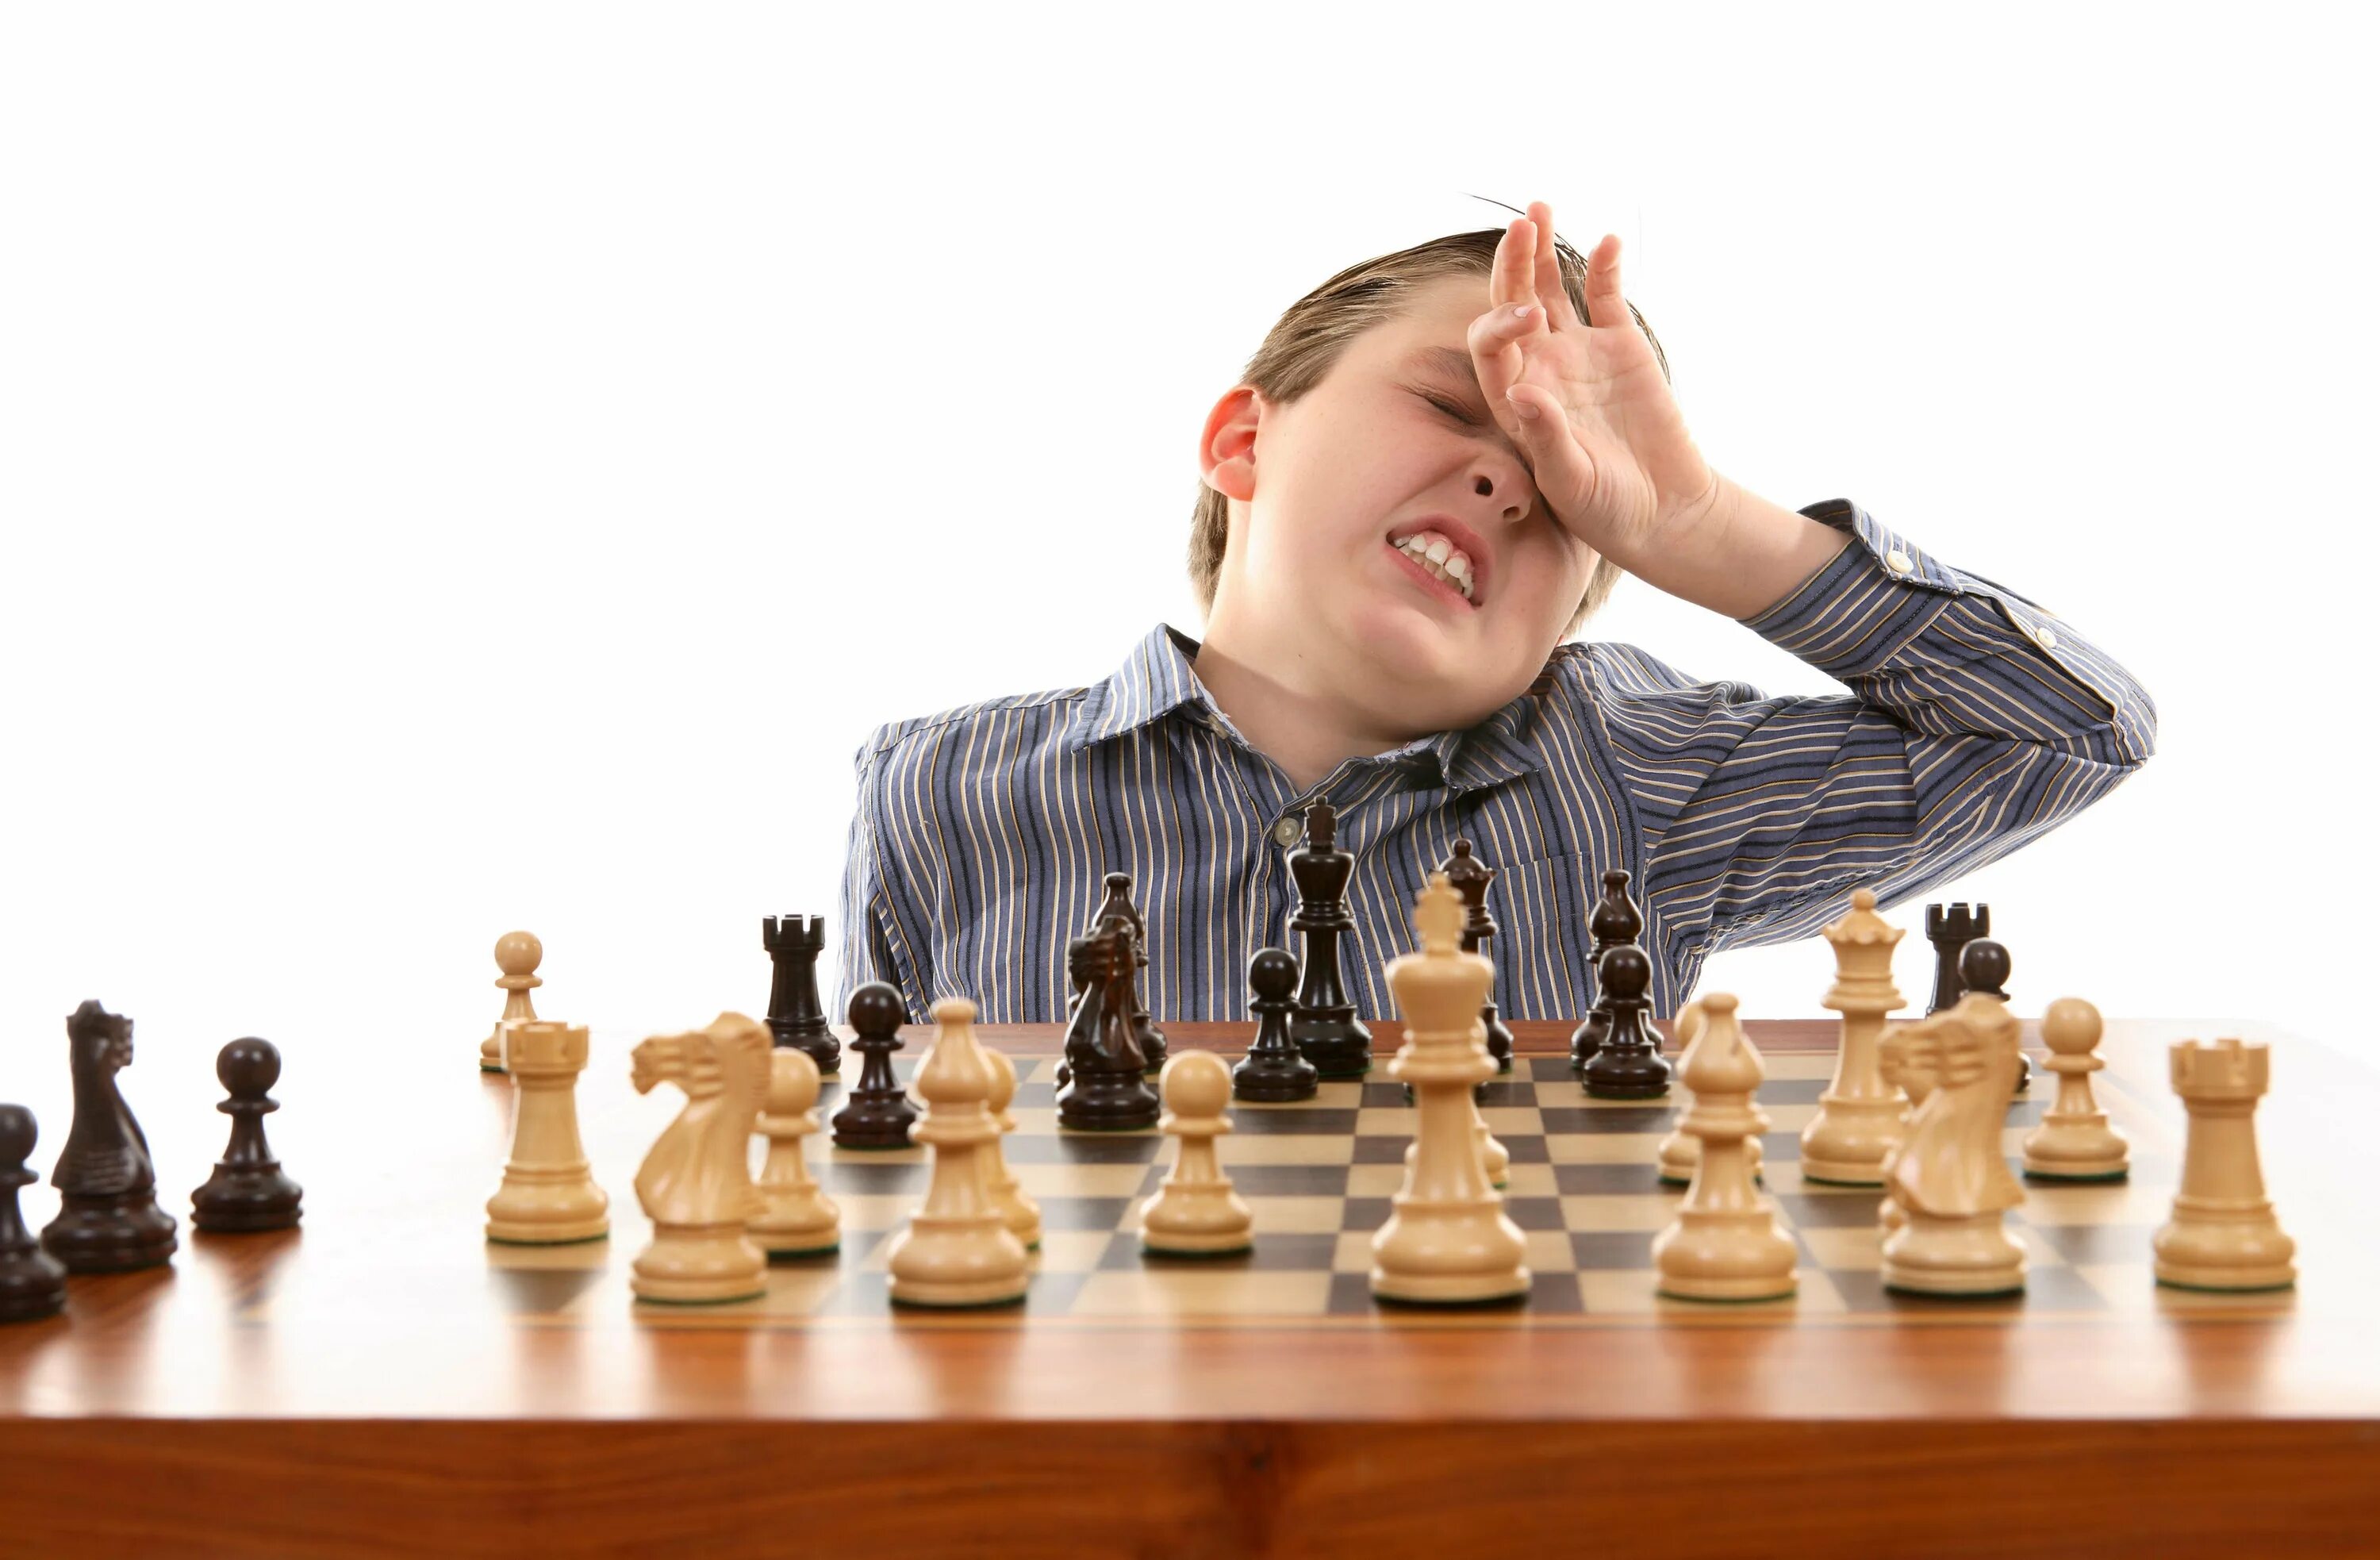 We like playing chess. Проиграл в шахматы. Мальчик проиграл в шахматы. Шахматный проигрыш. Шахматы для детей.